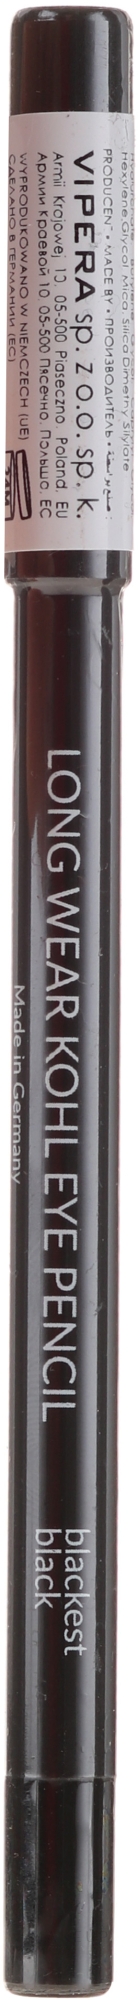 Langanhaltender Kajalstift - Vipera Long Wear Kohl Eye Pencil — Foto Blackest Black